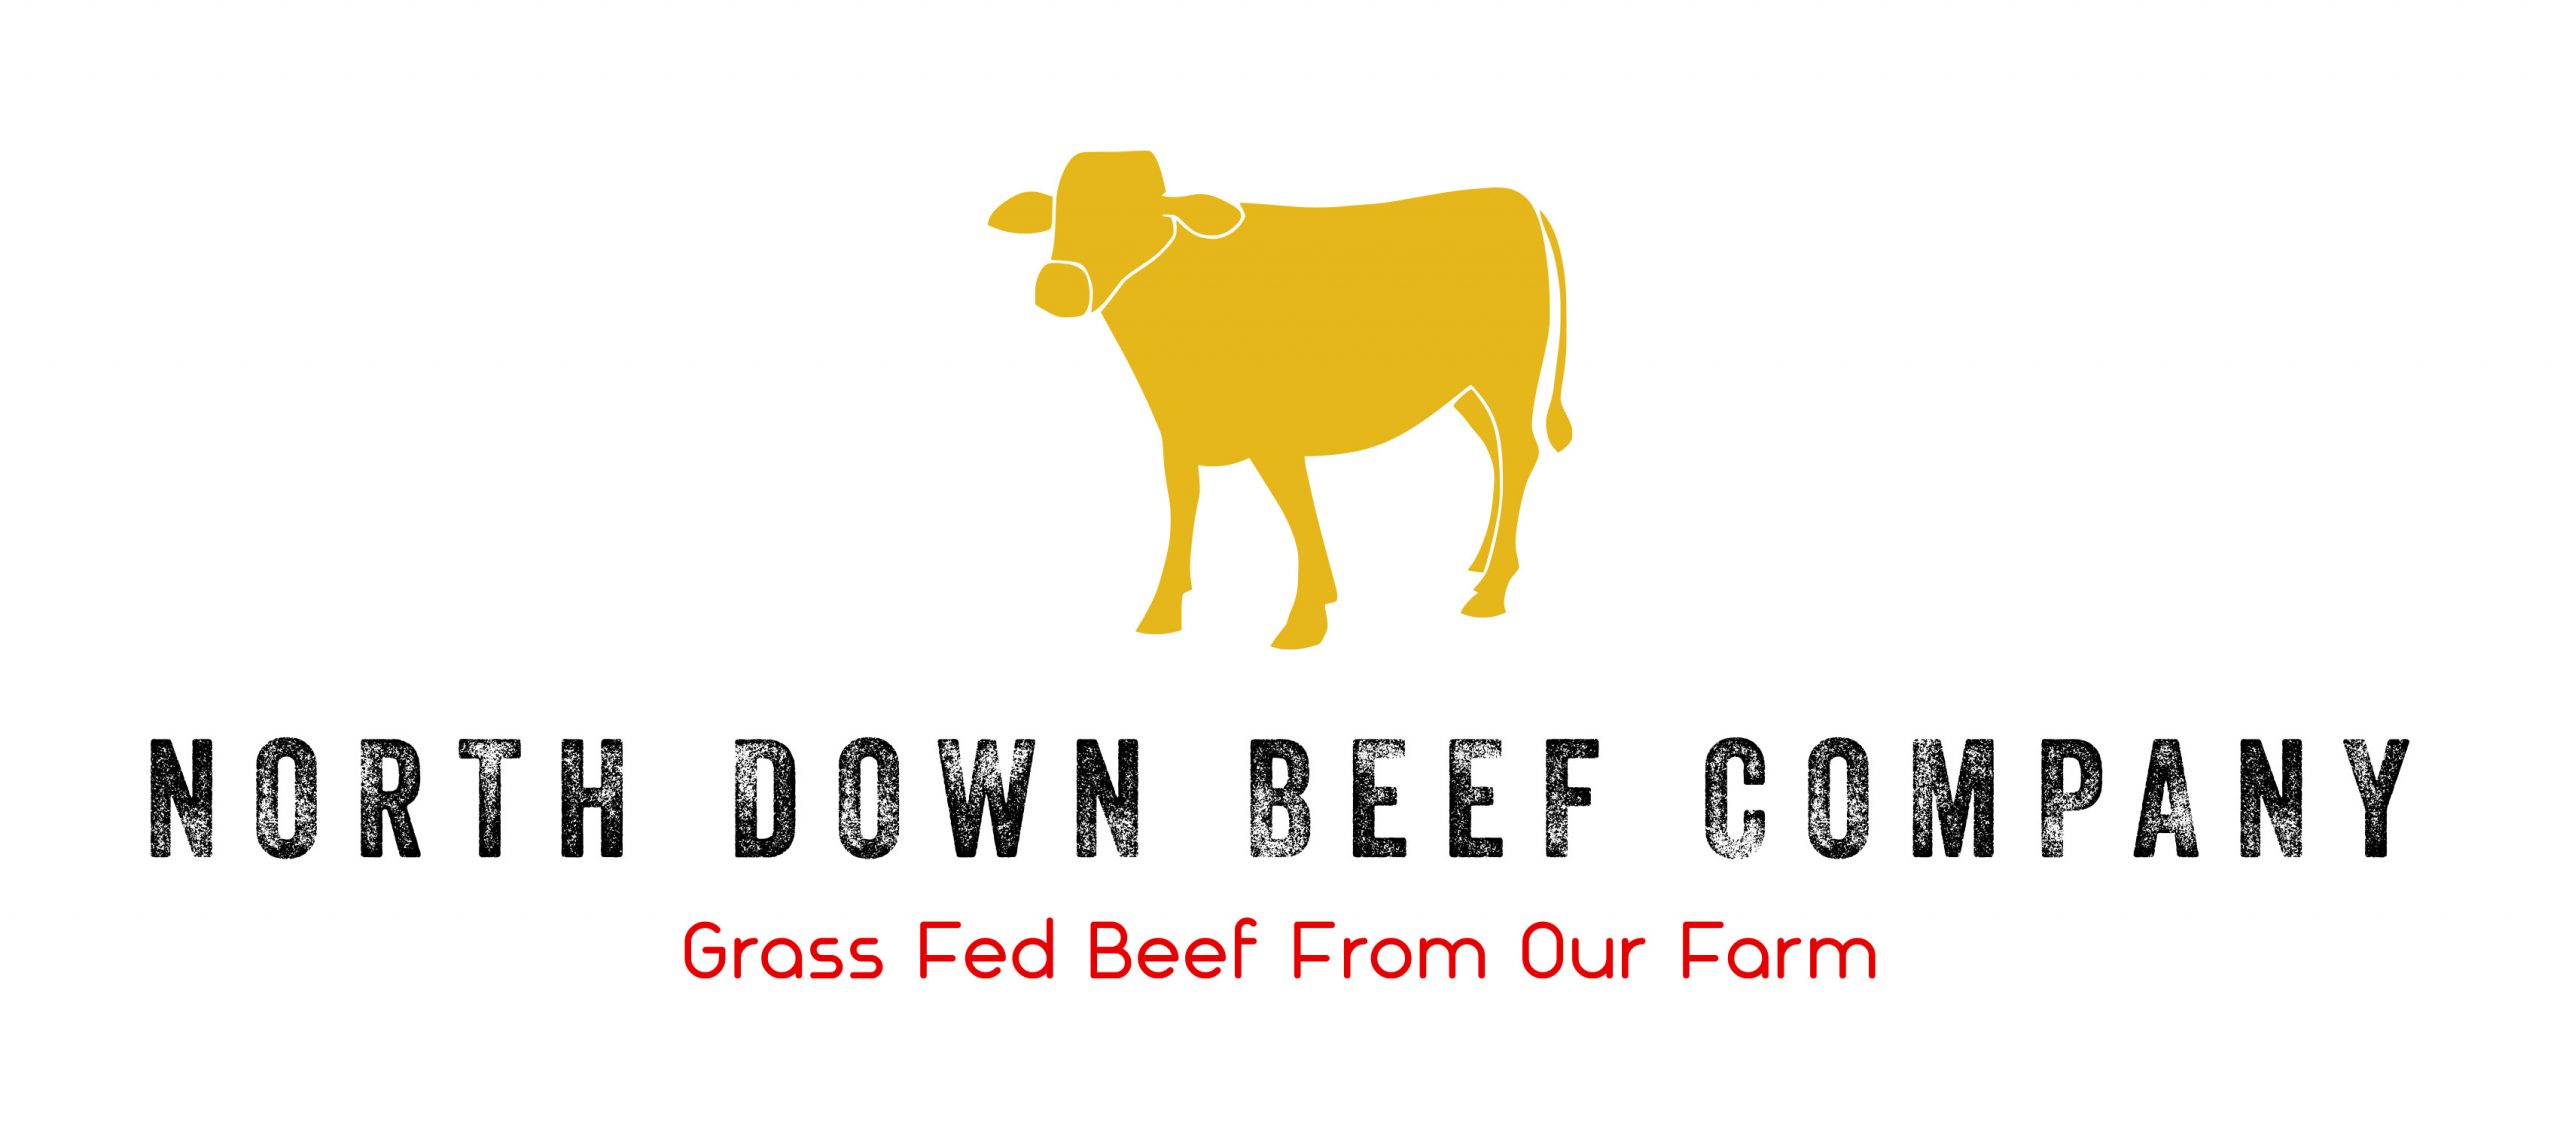 North Down Beef Company